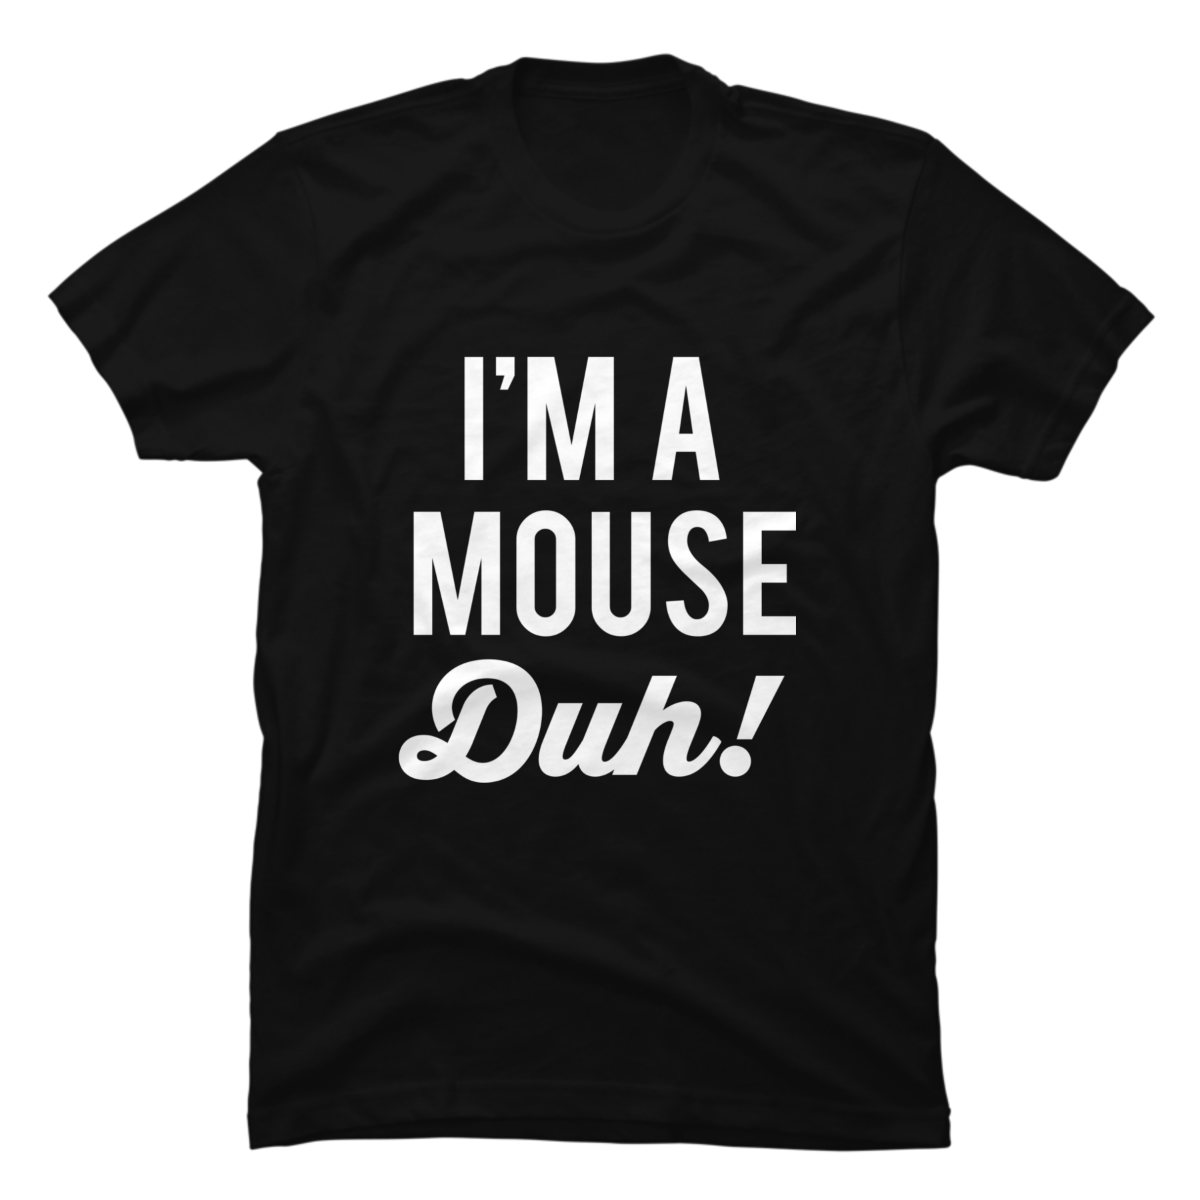 im a mouse duh shirt